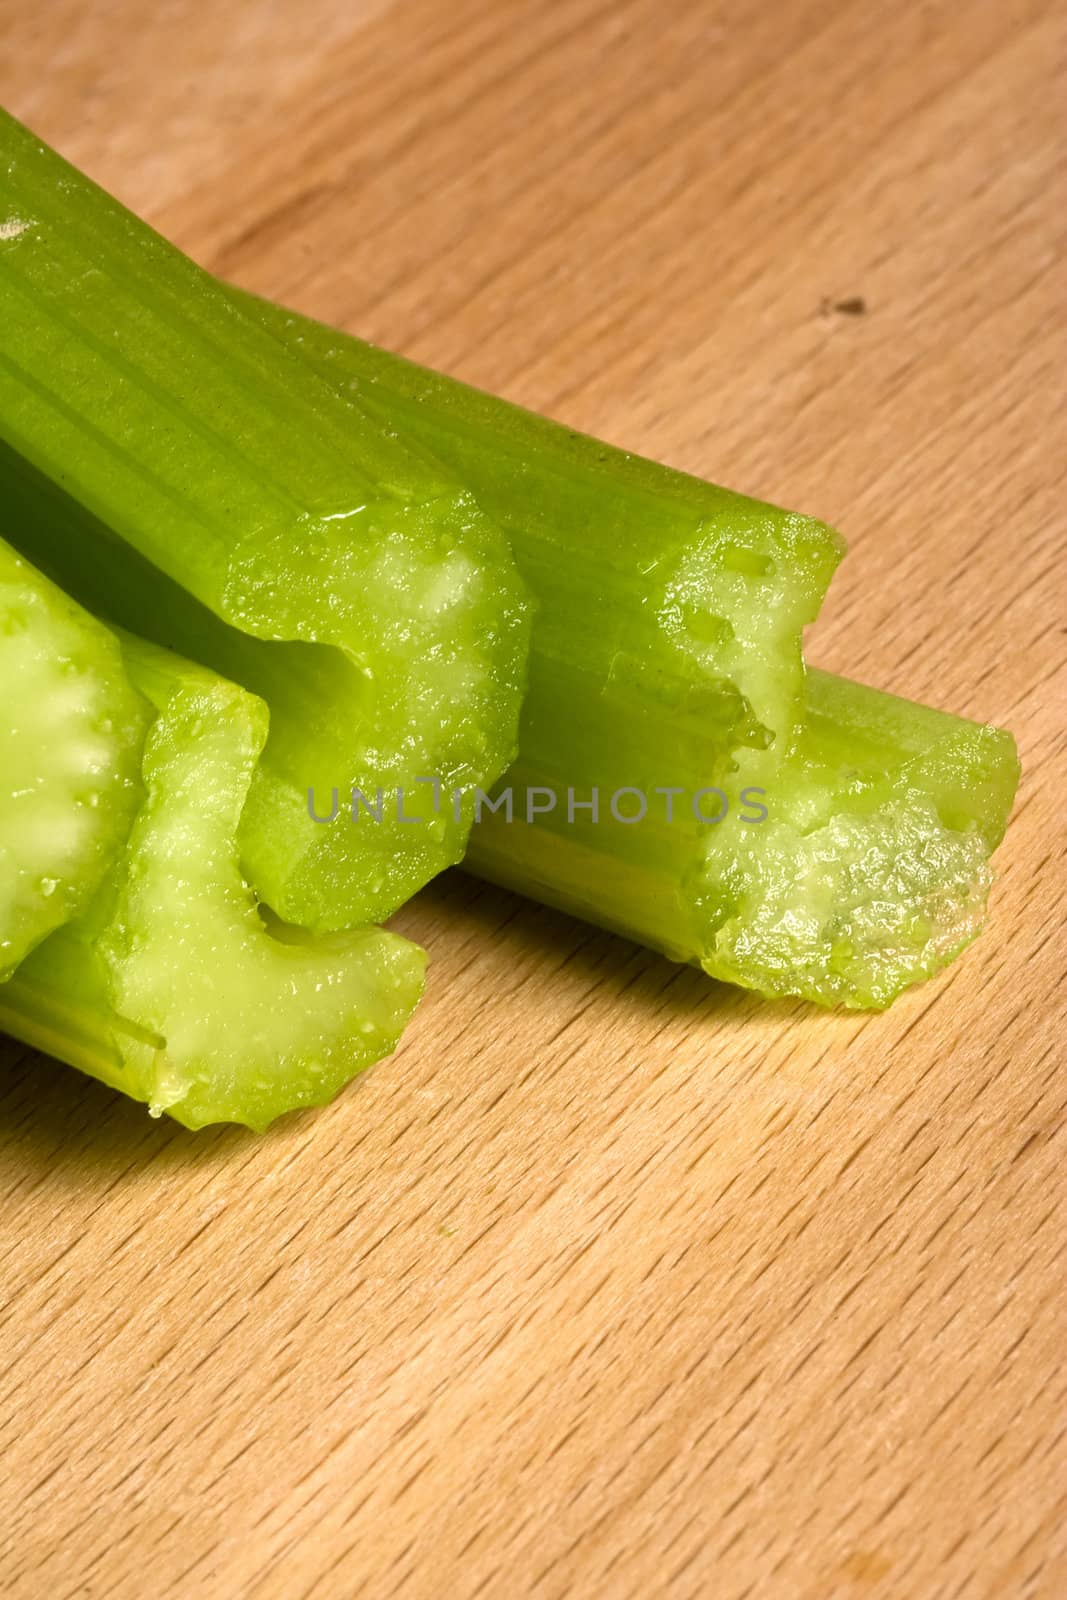 celery by snokid